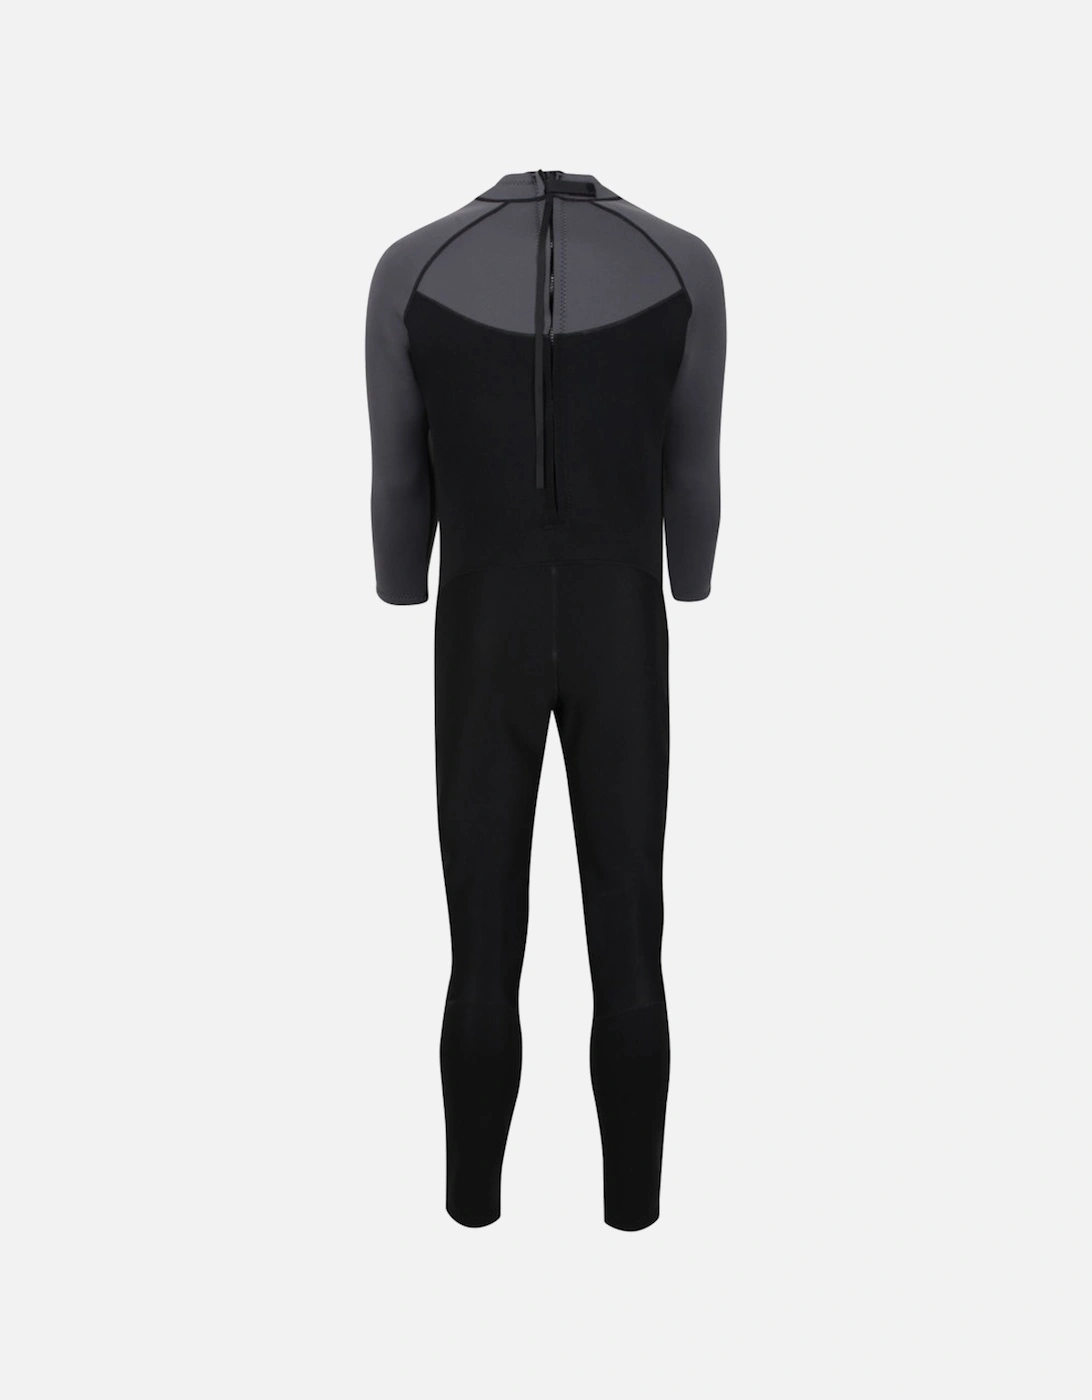 Mens Full Lightweight Comfortable Grippy Wetsuit